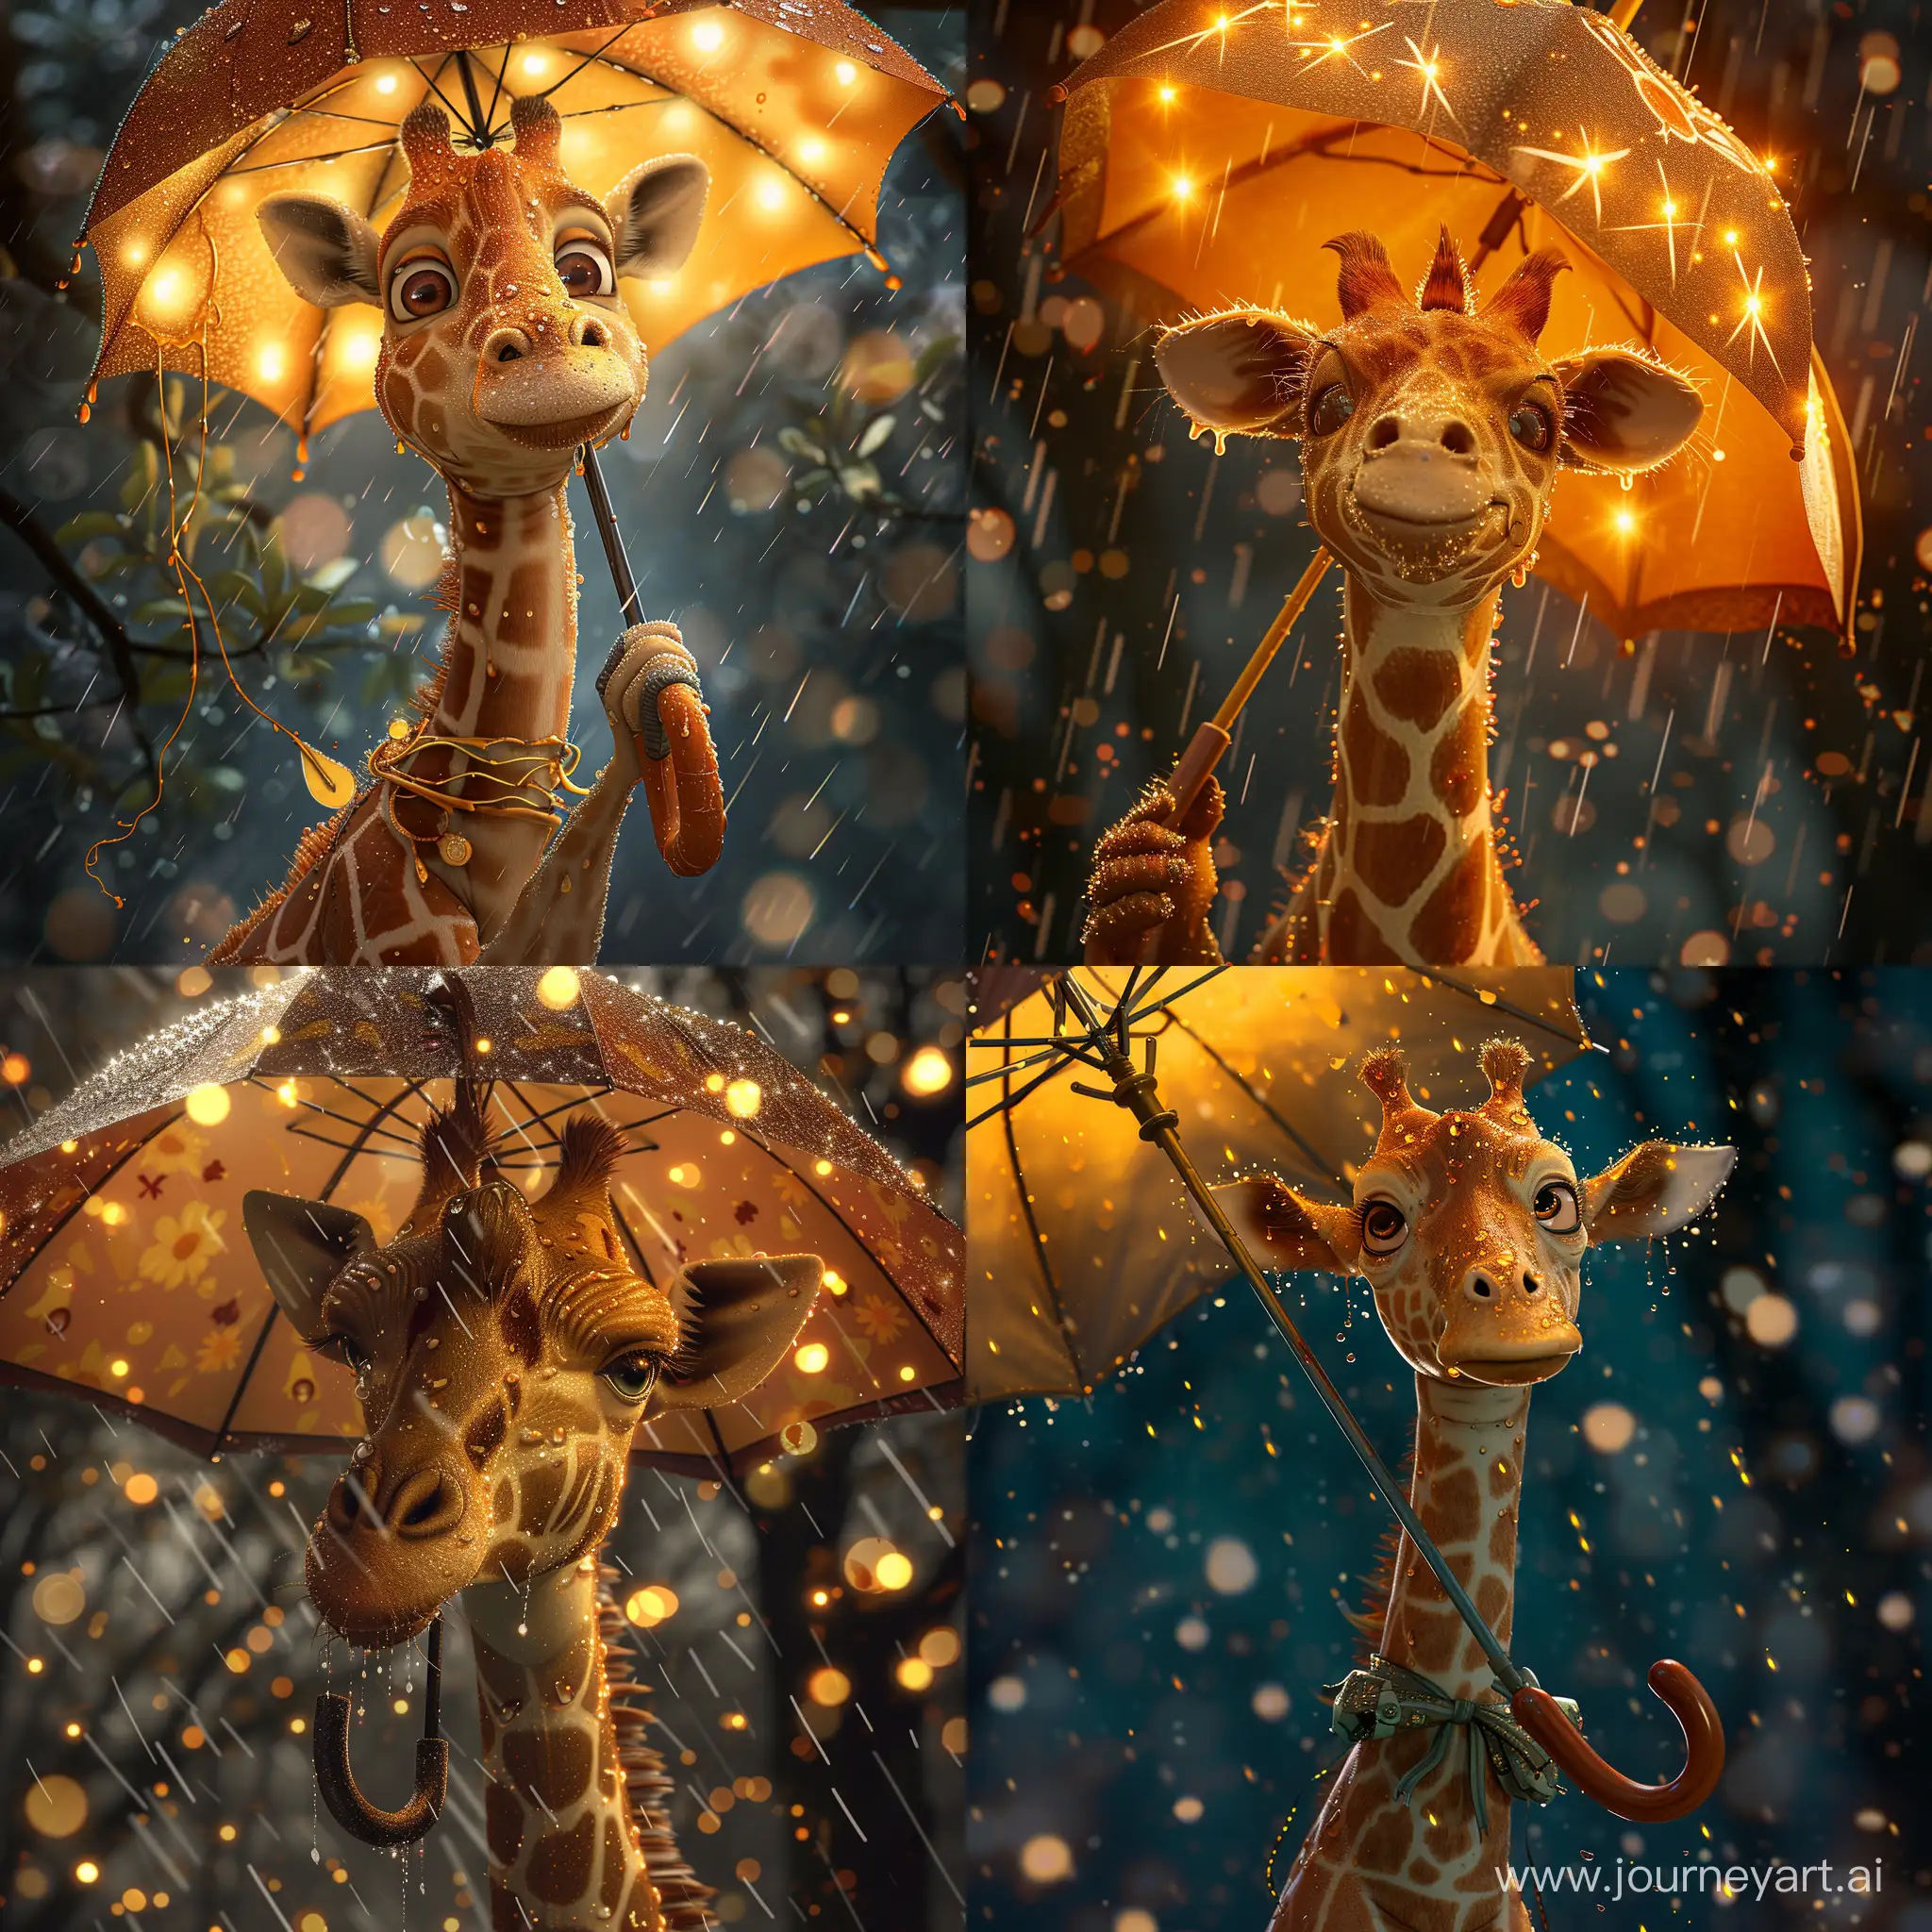 Adorable-Pixar-Style-Giraffe-with-Umbrella-in-Rain-Fantasy-Digital-Art